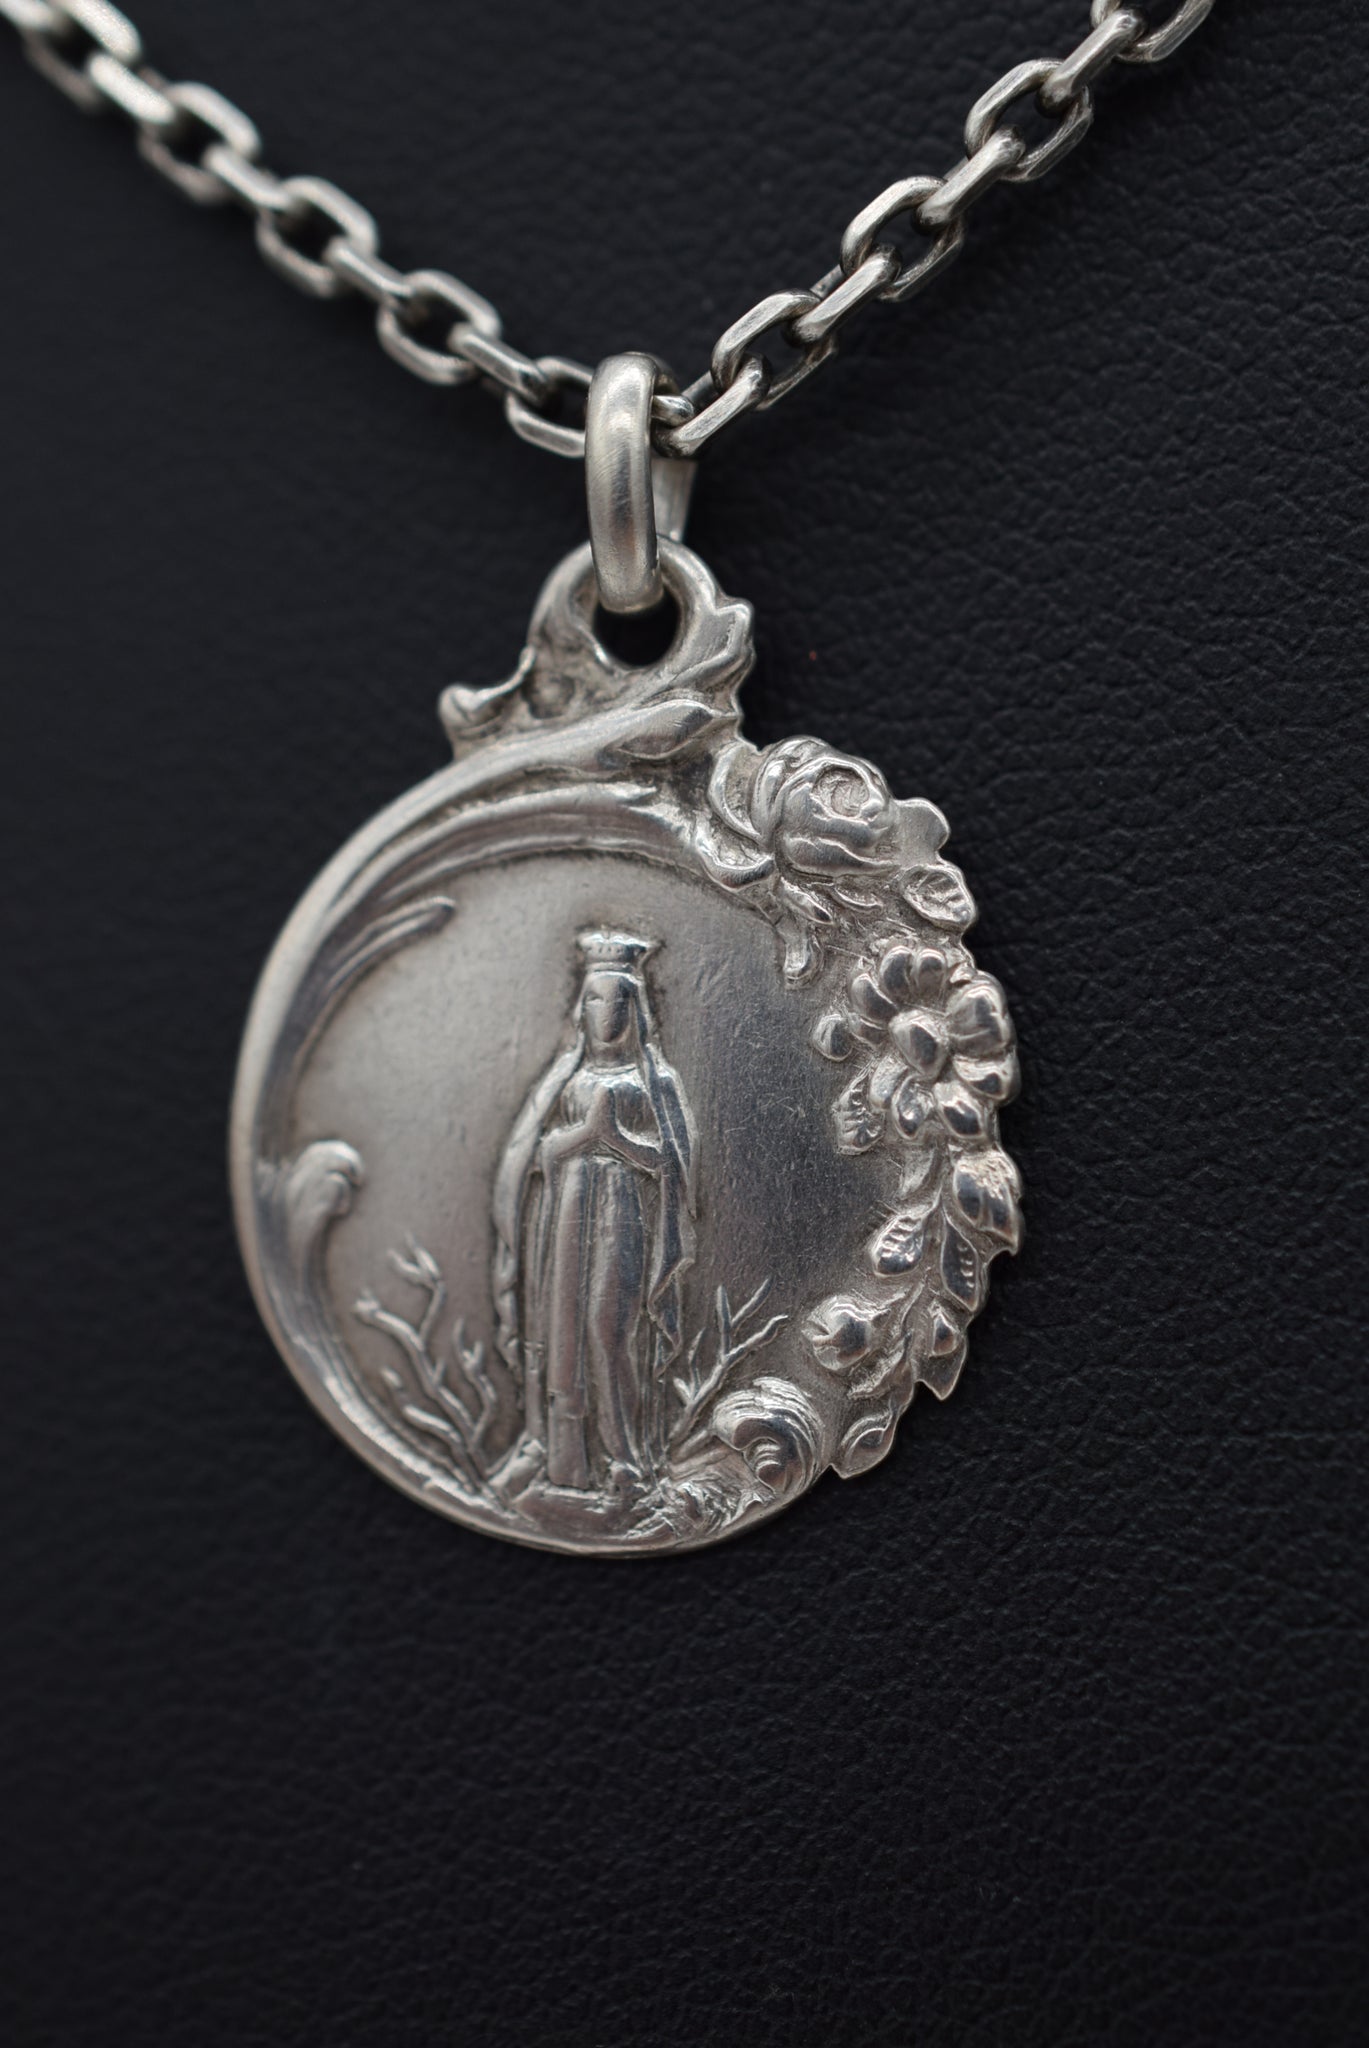 French Antique Sterling Silver Medal Souvenir of Lourdes